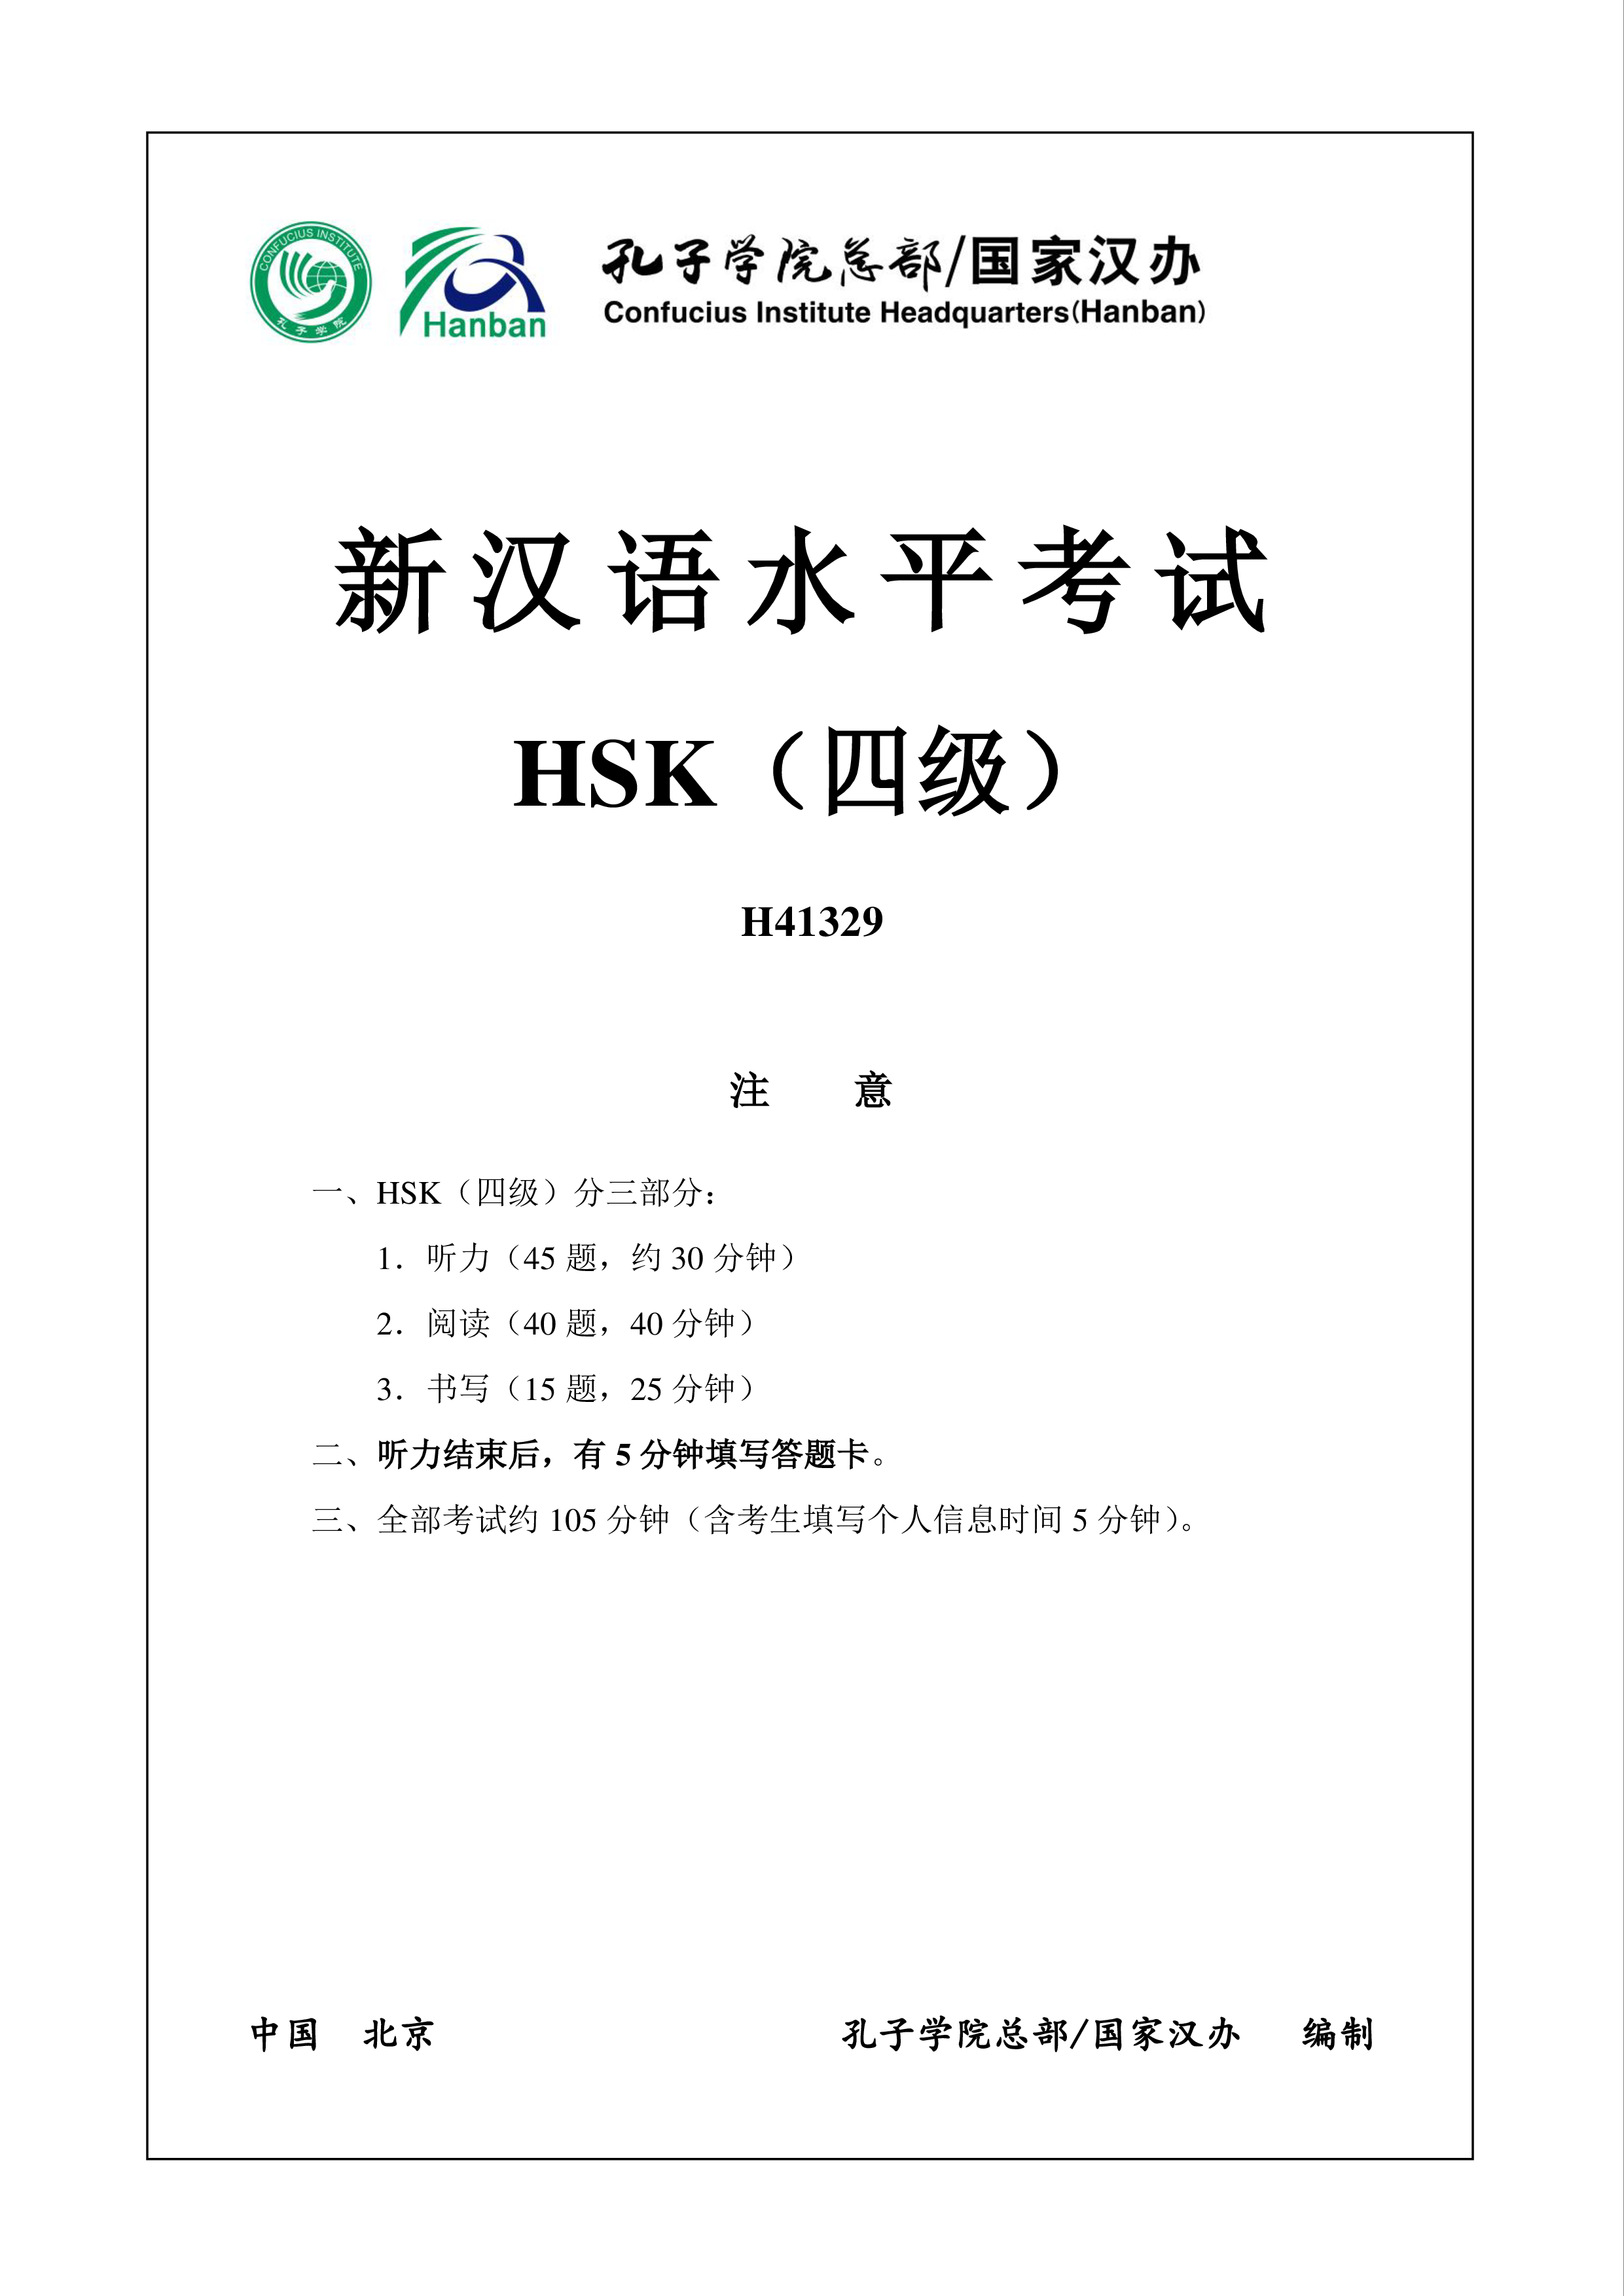 HSK4 Chinees Examen H41329 模板